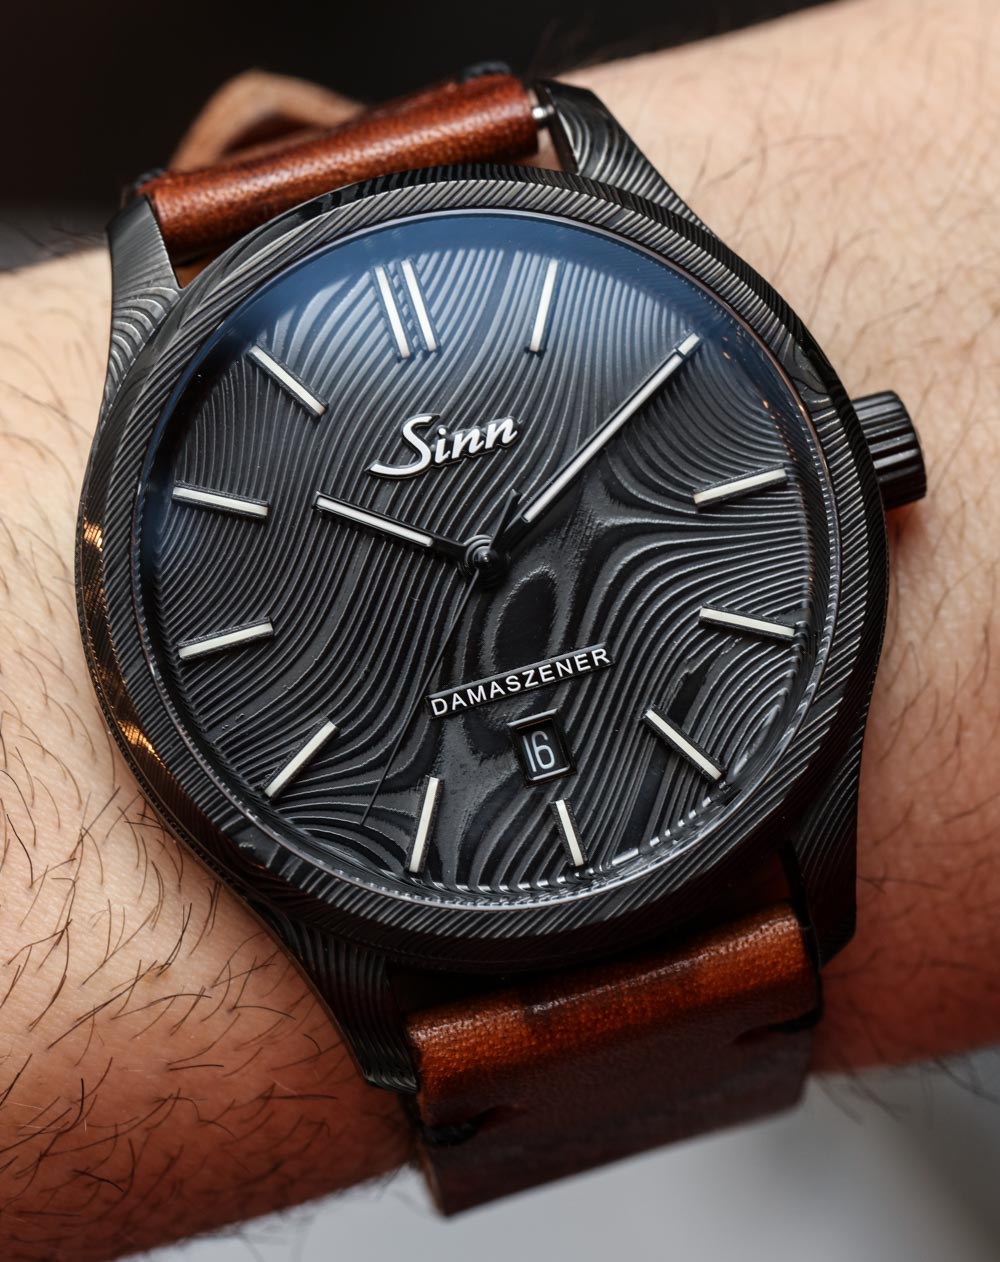 Sinn-1800-S-Damaszener-watch-3